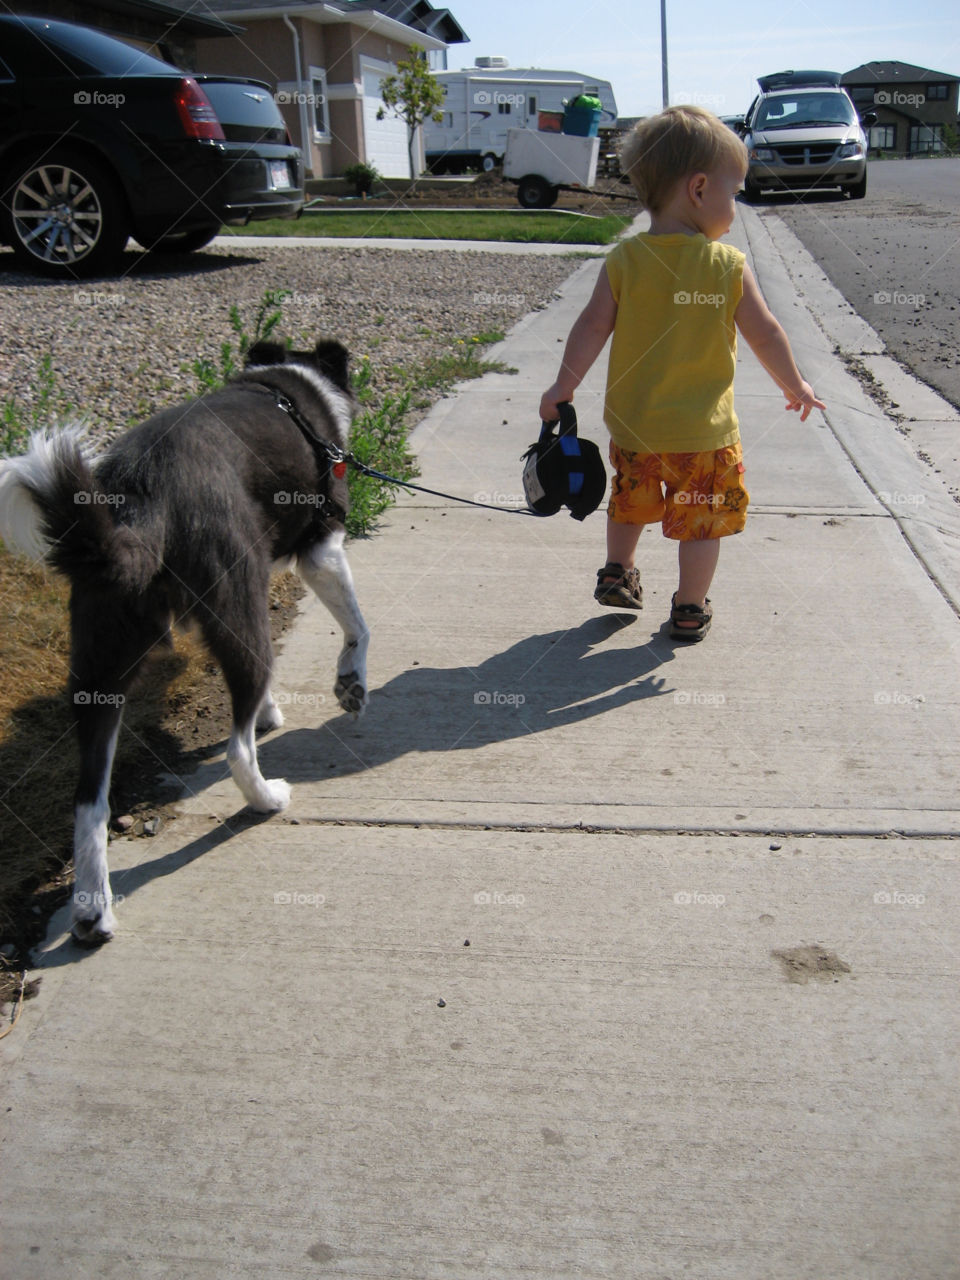 My son always enjoyed taking our dog on walks